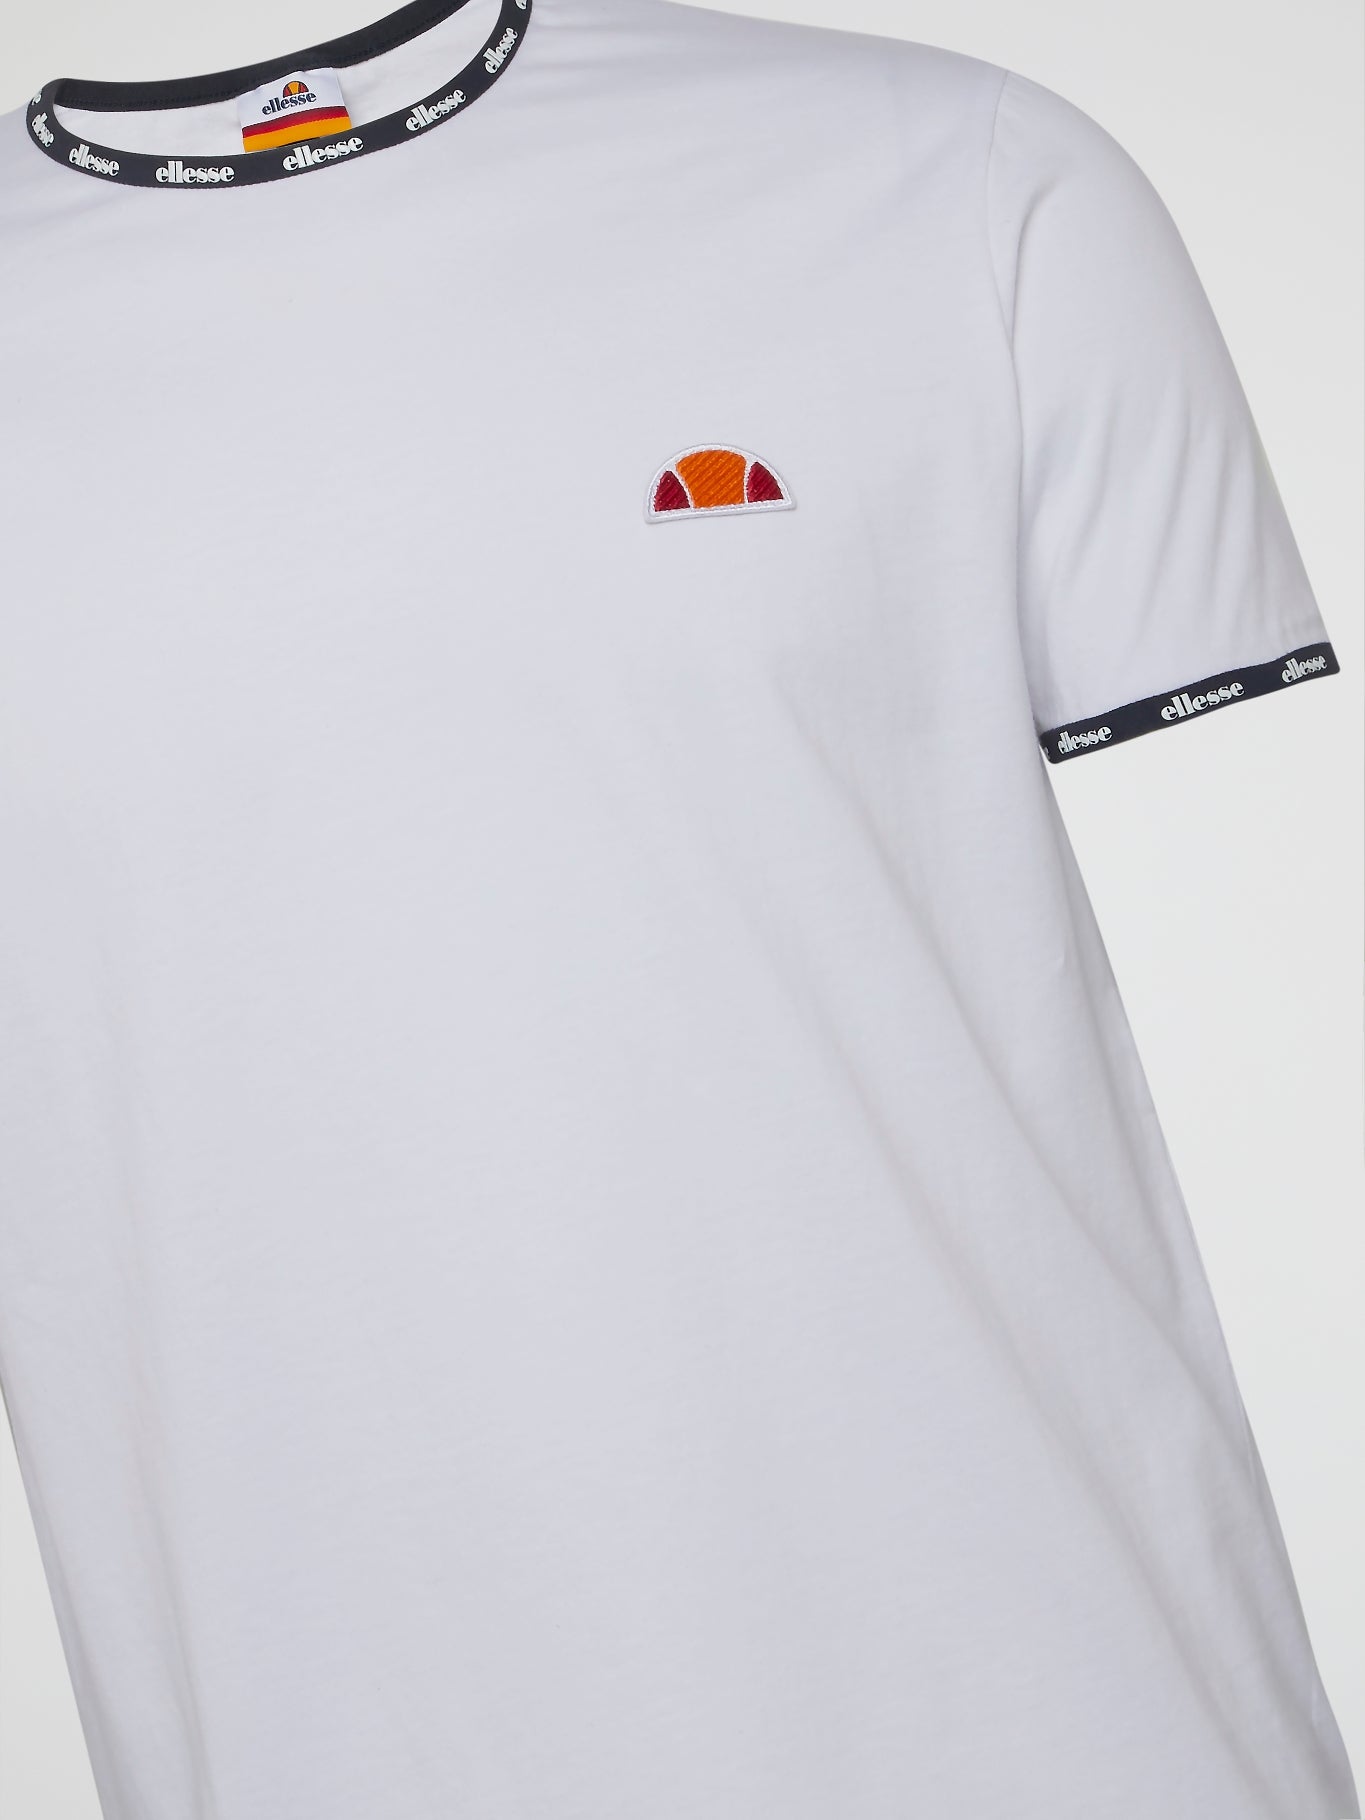 Eden White Store Maison-B-More Logo – Trim T-Shirt Global